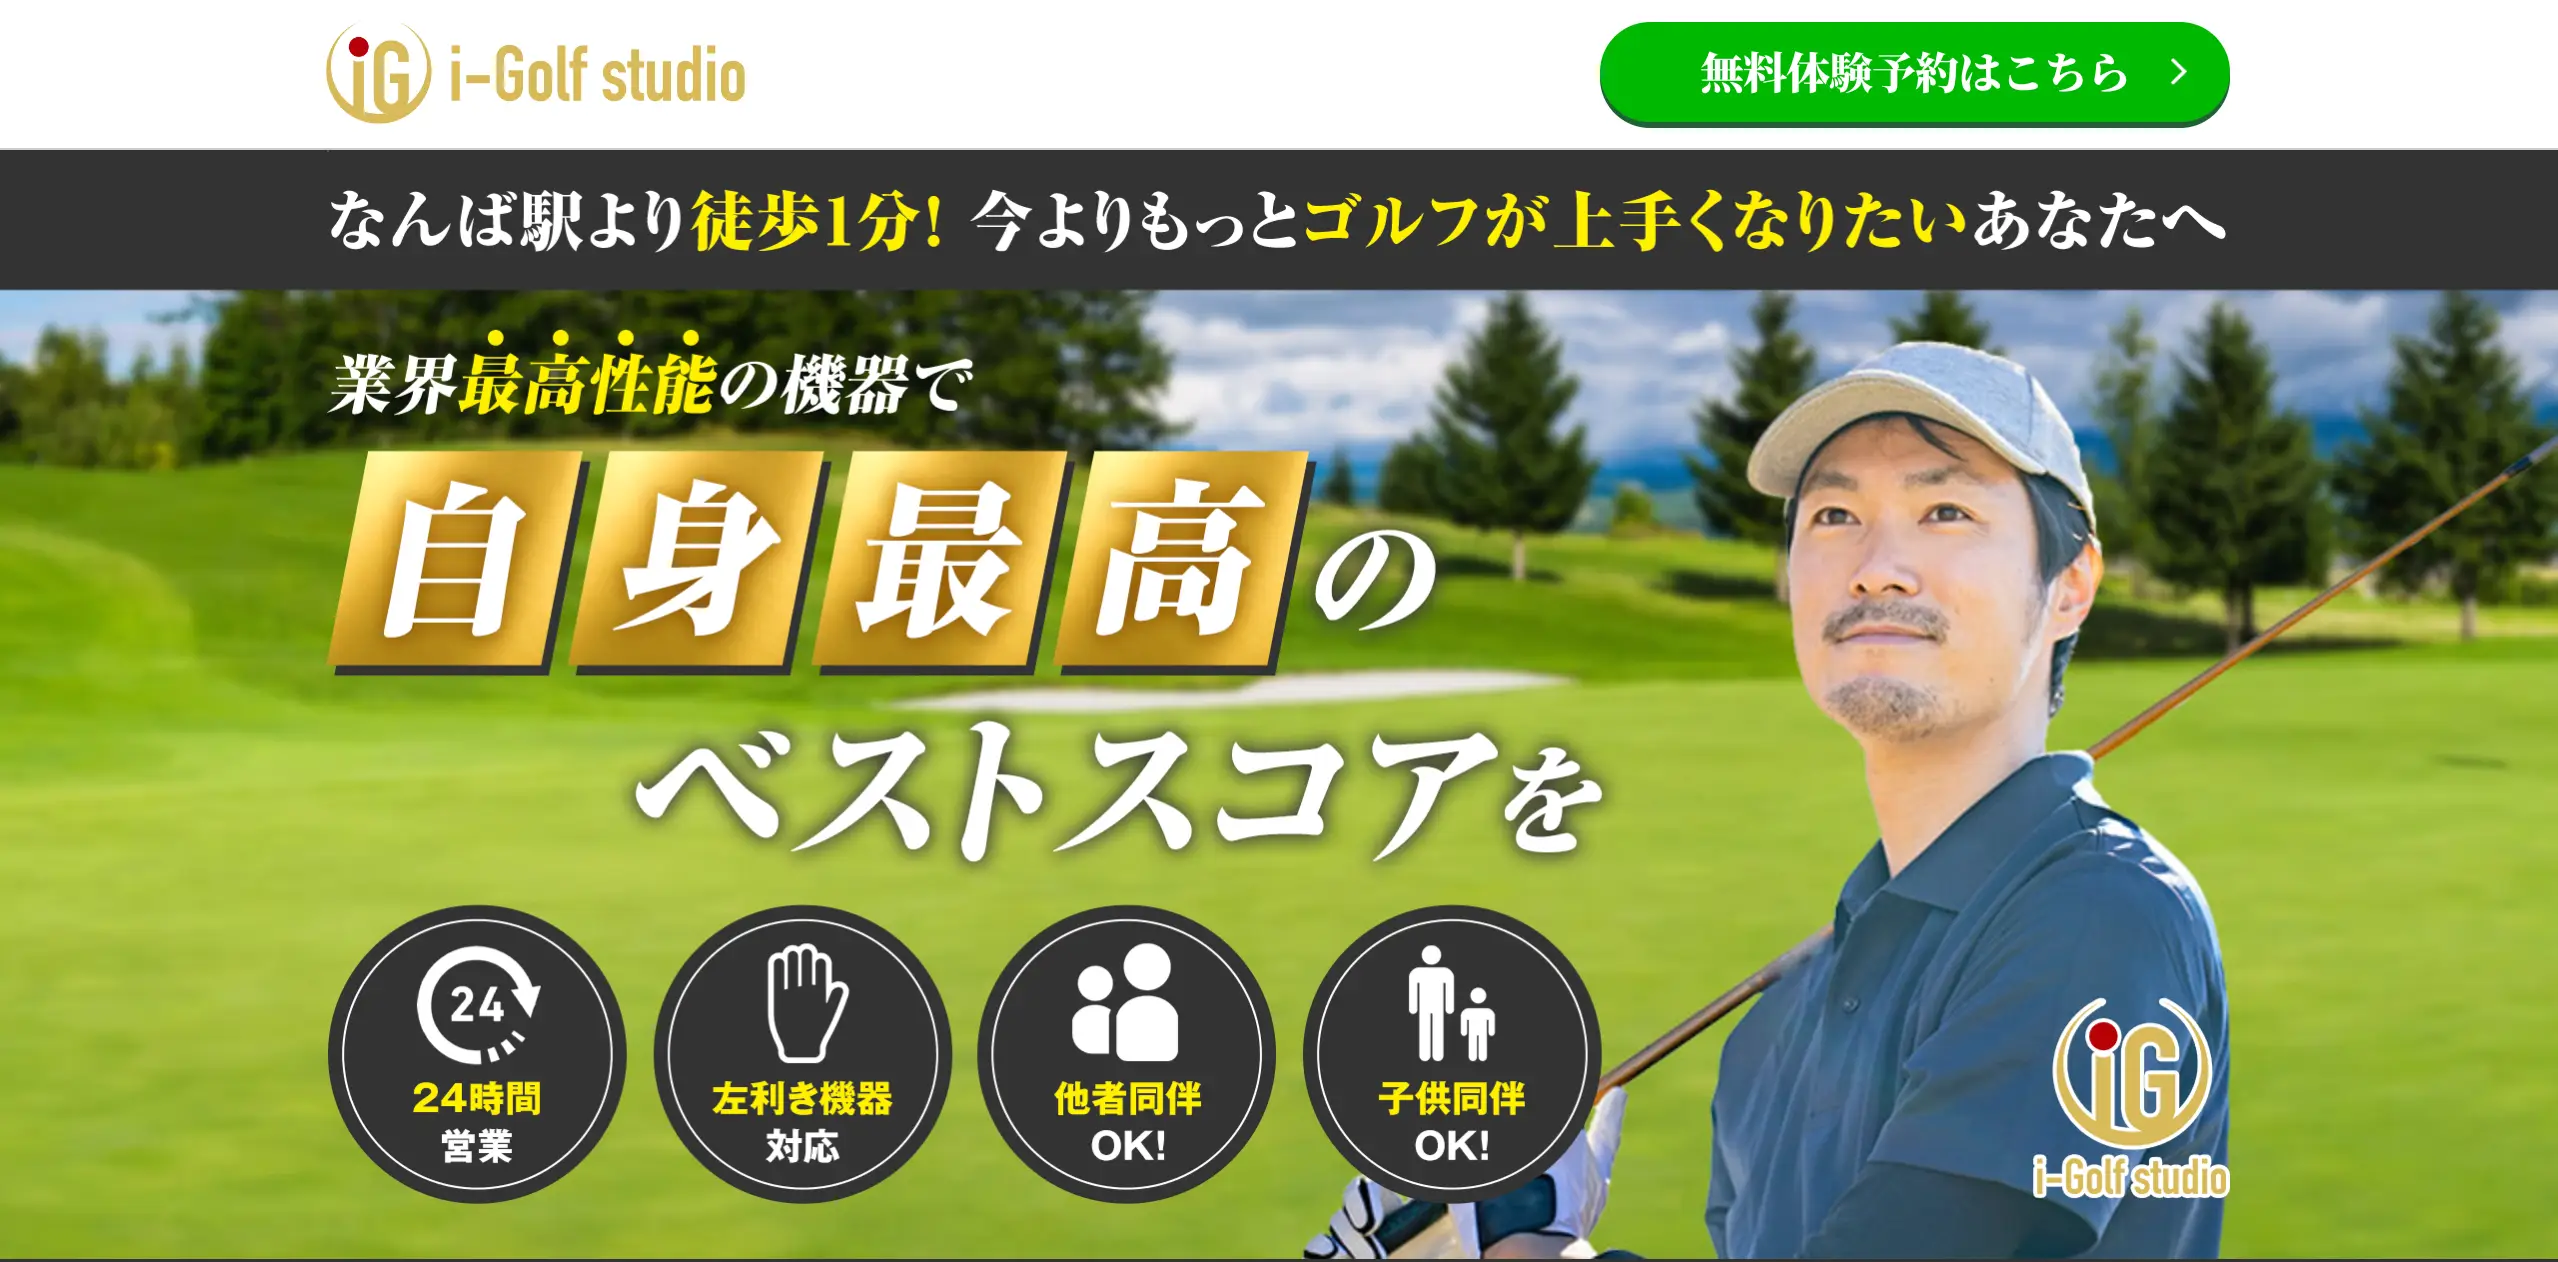 i-Golfスタジオ なんば店